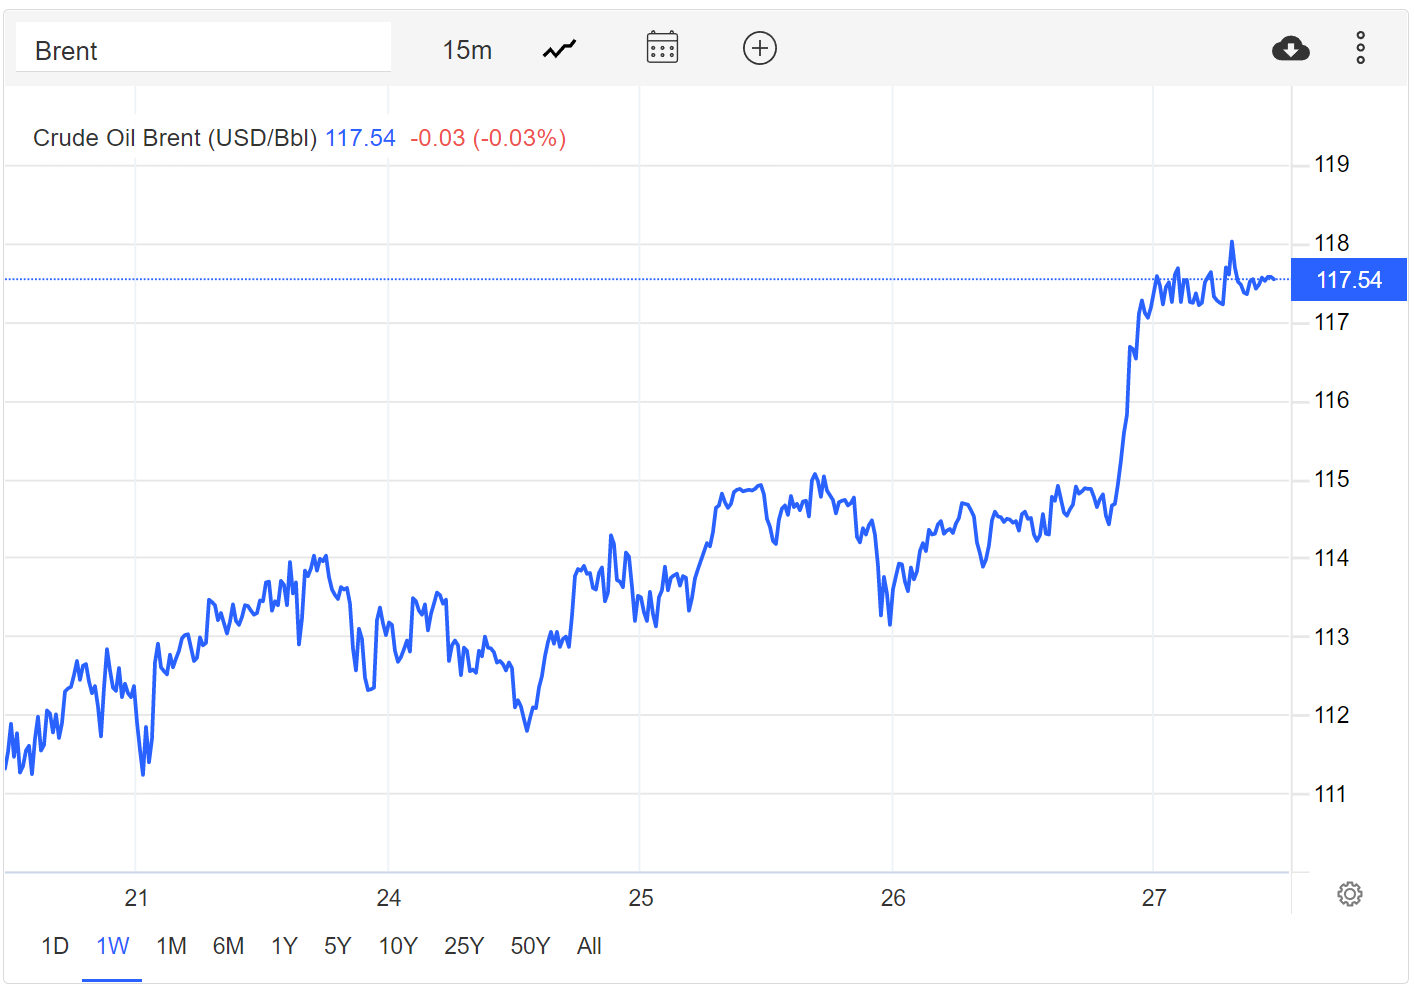 (Source: TradingEconomics) The last week of Brent Crude price charts